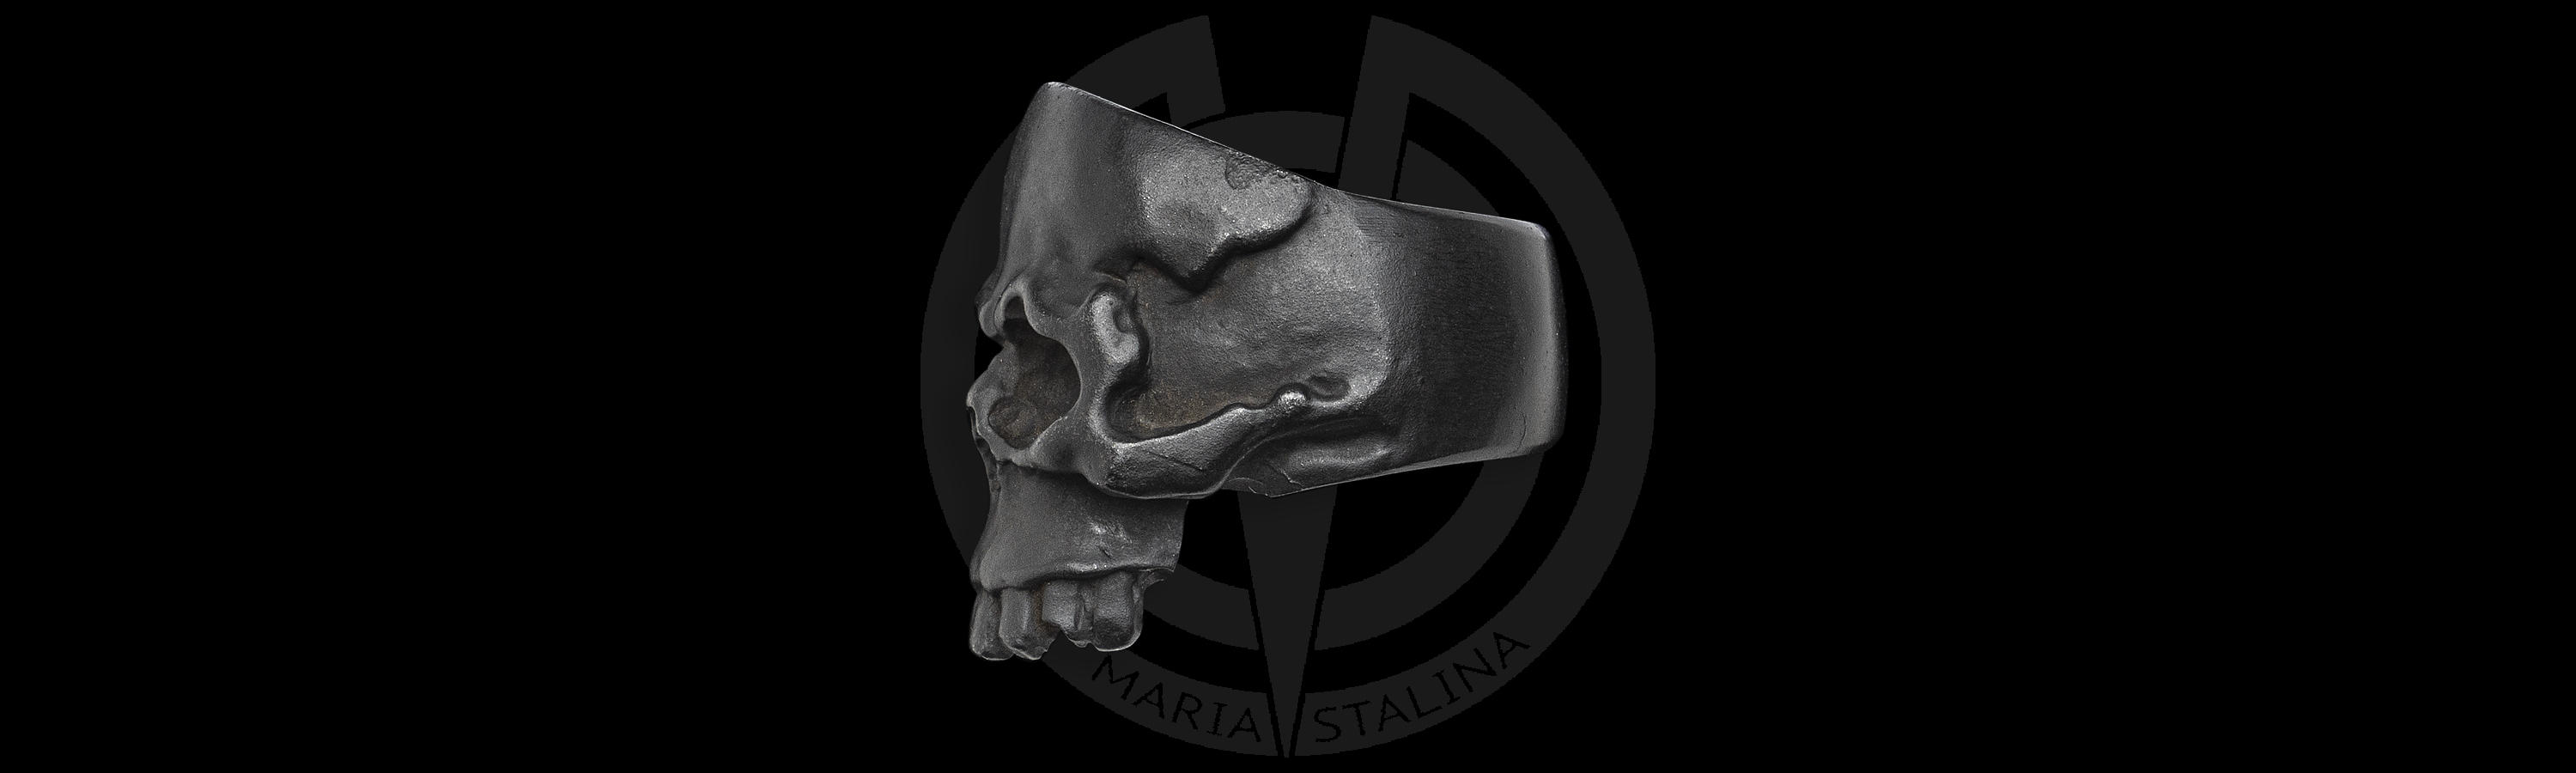 Blackened steel ring Skull